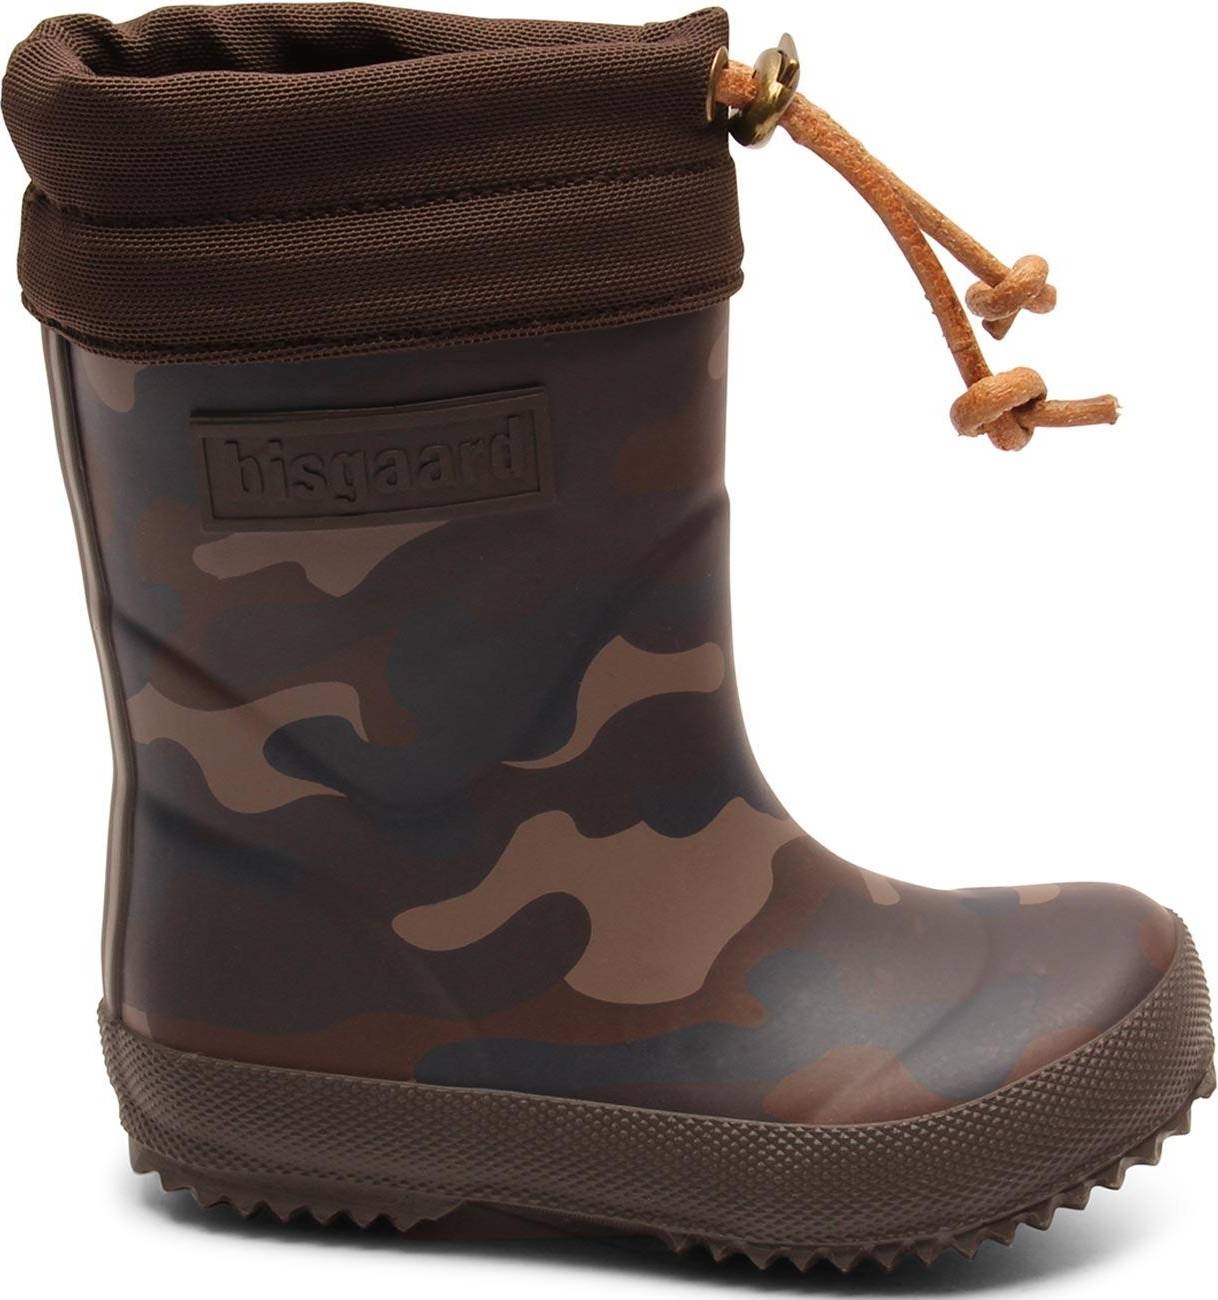  Bild på Bisgaard Thermo Rubber Boots - Army gummistövlar